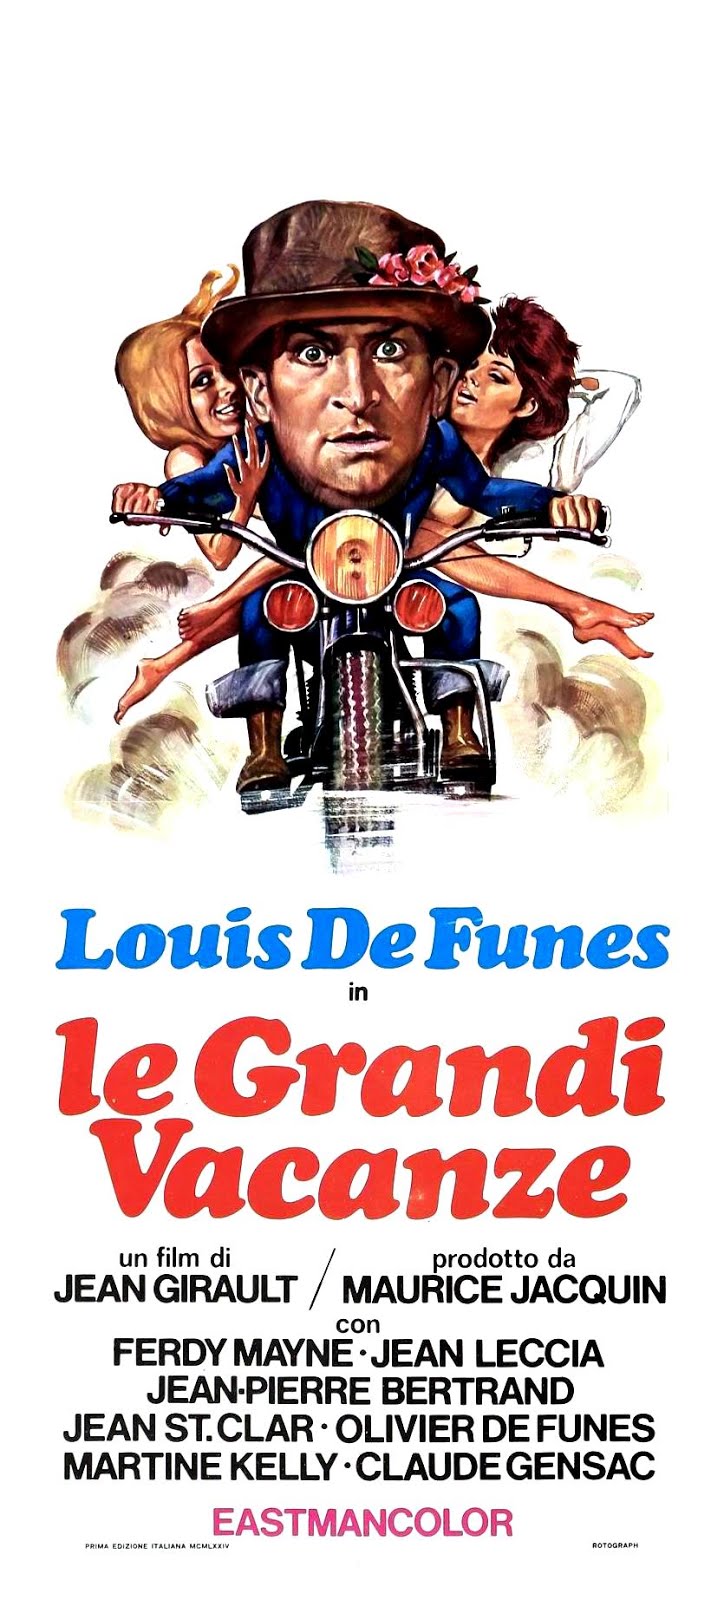 Les grandes vacances (1967) Jean Girault - Les grandes vacances (24.05.1967 / 02.09.1967)